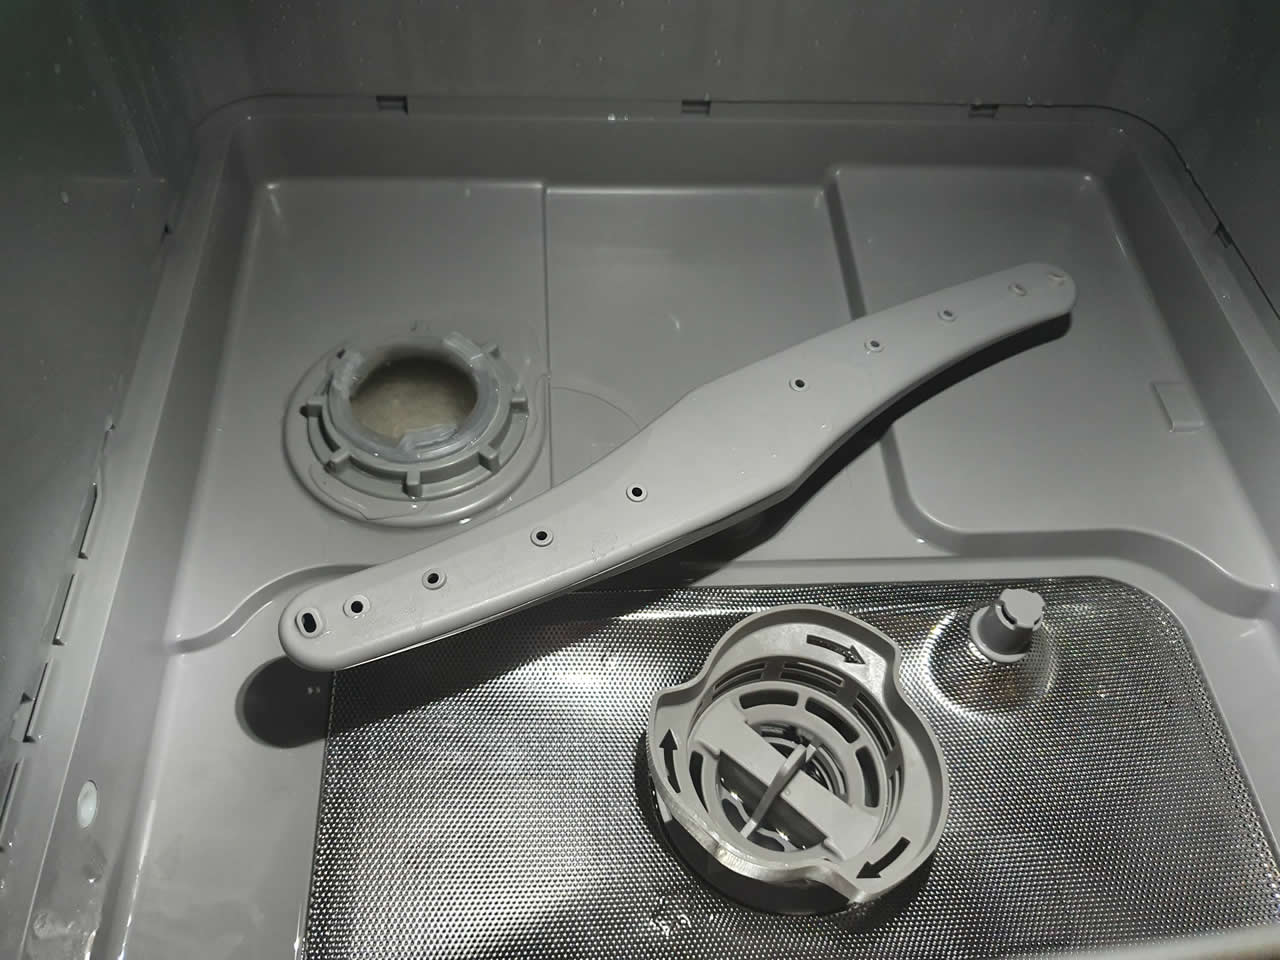 Maximus dishwasher refilling the salt in Salt Compartment